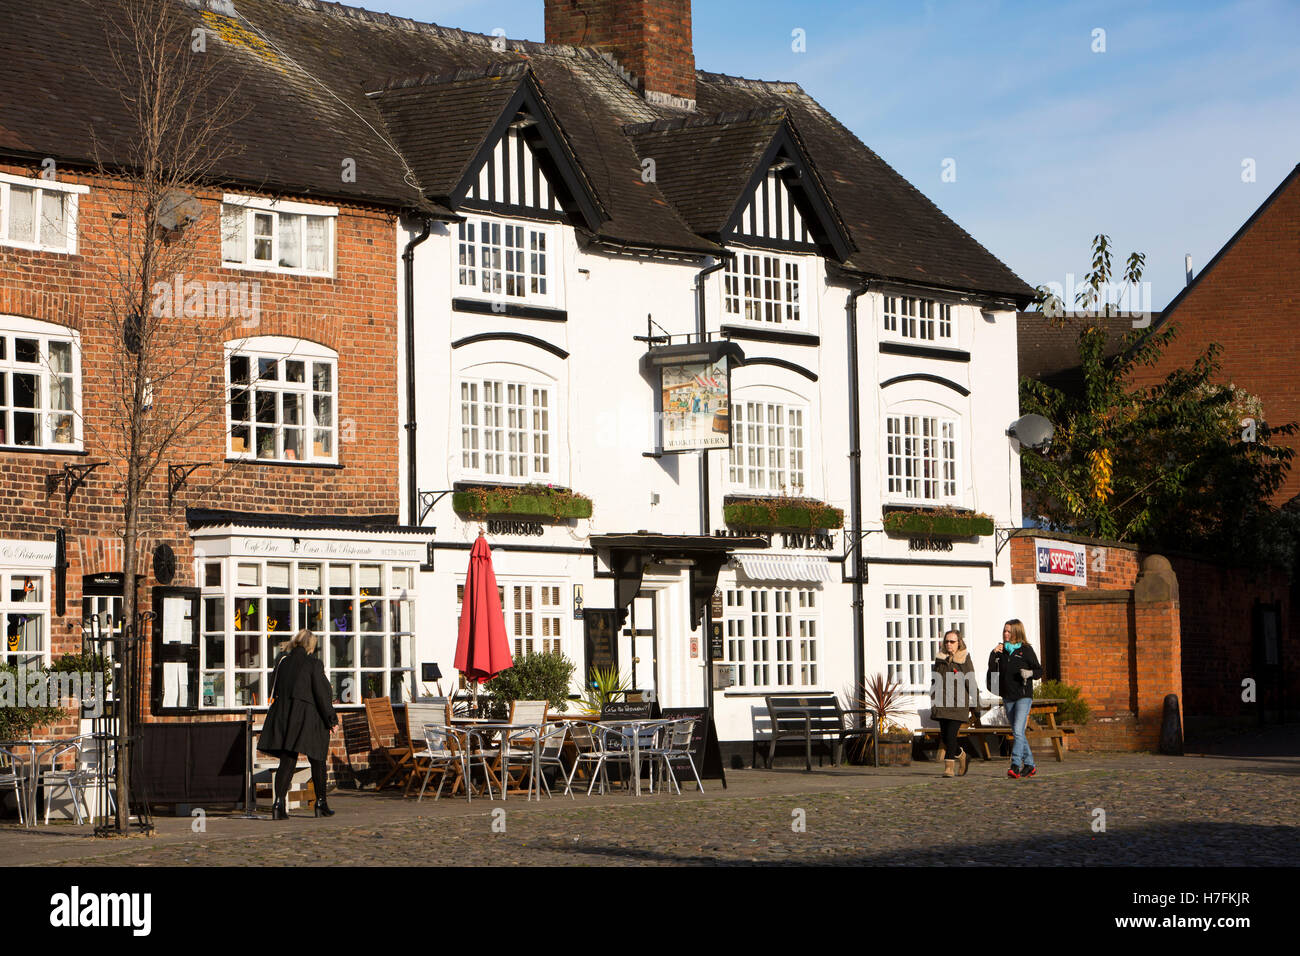 UK, England, Cheshire, Sandbach, The Square, Market Tavern, historic old coaching inn Stock Photo